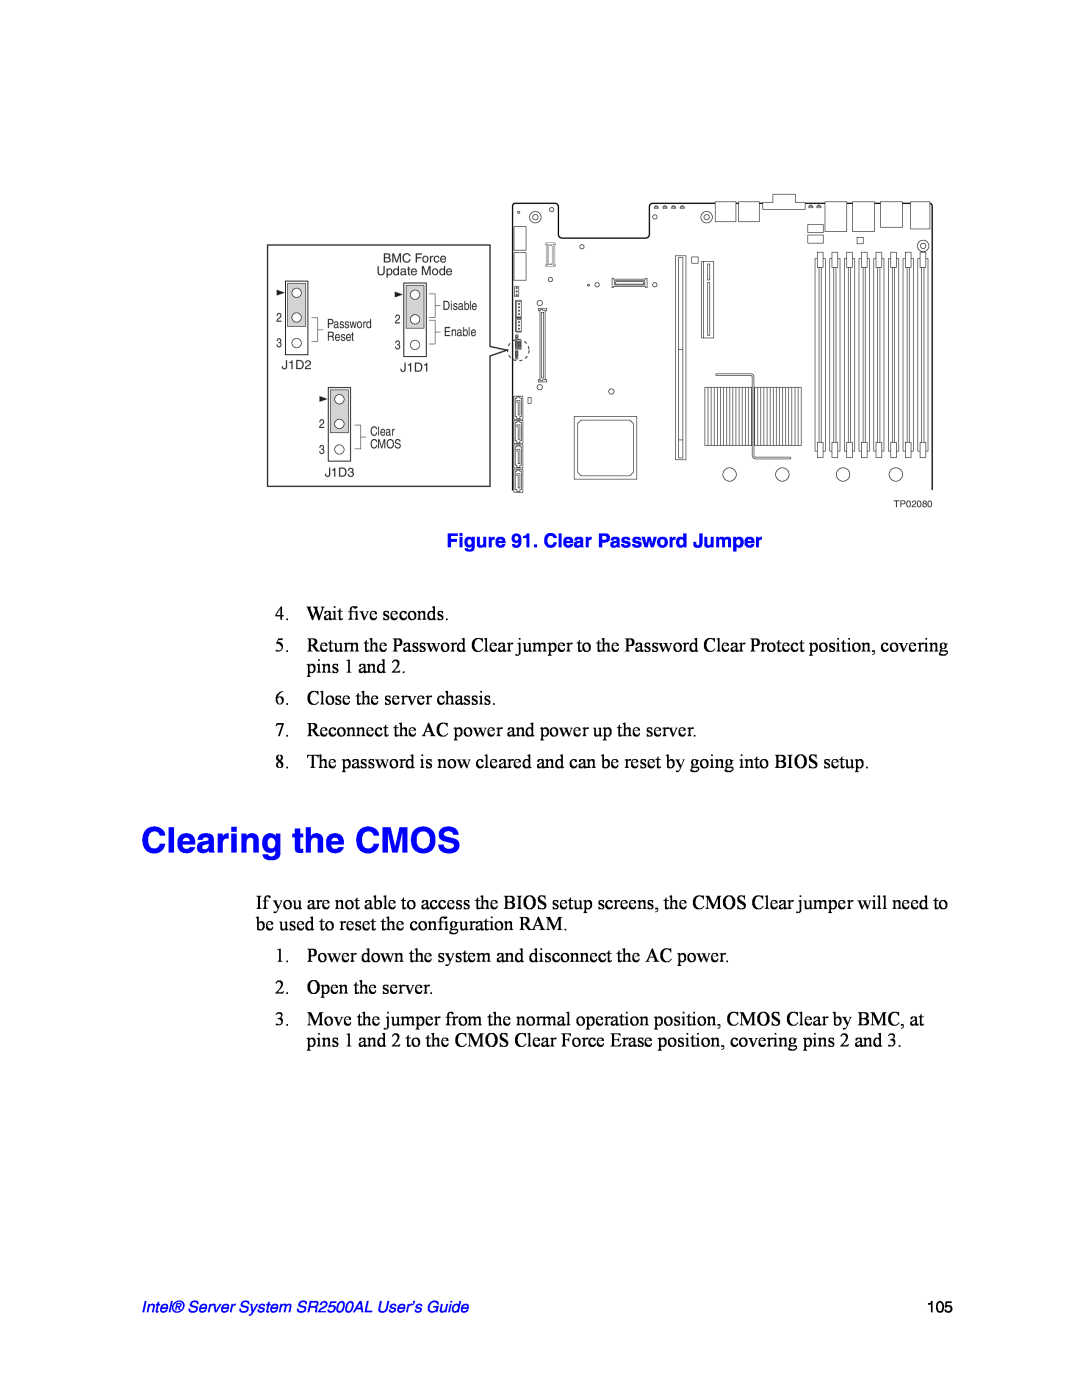 Intel SR2500AL manual Clearing the CMOS, Clear Password Jumper 